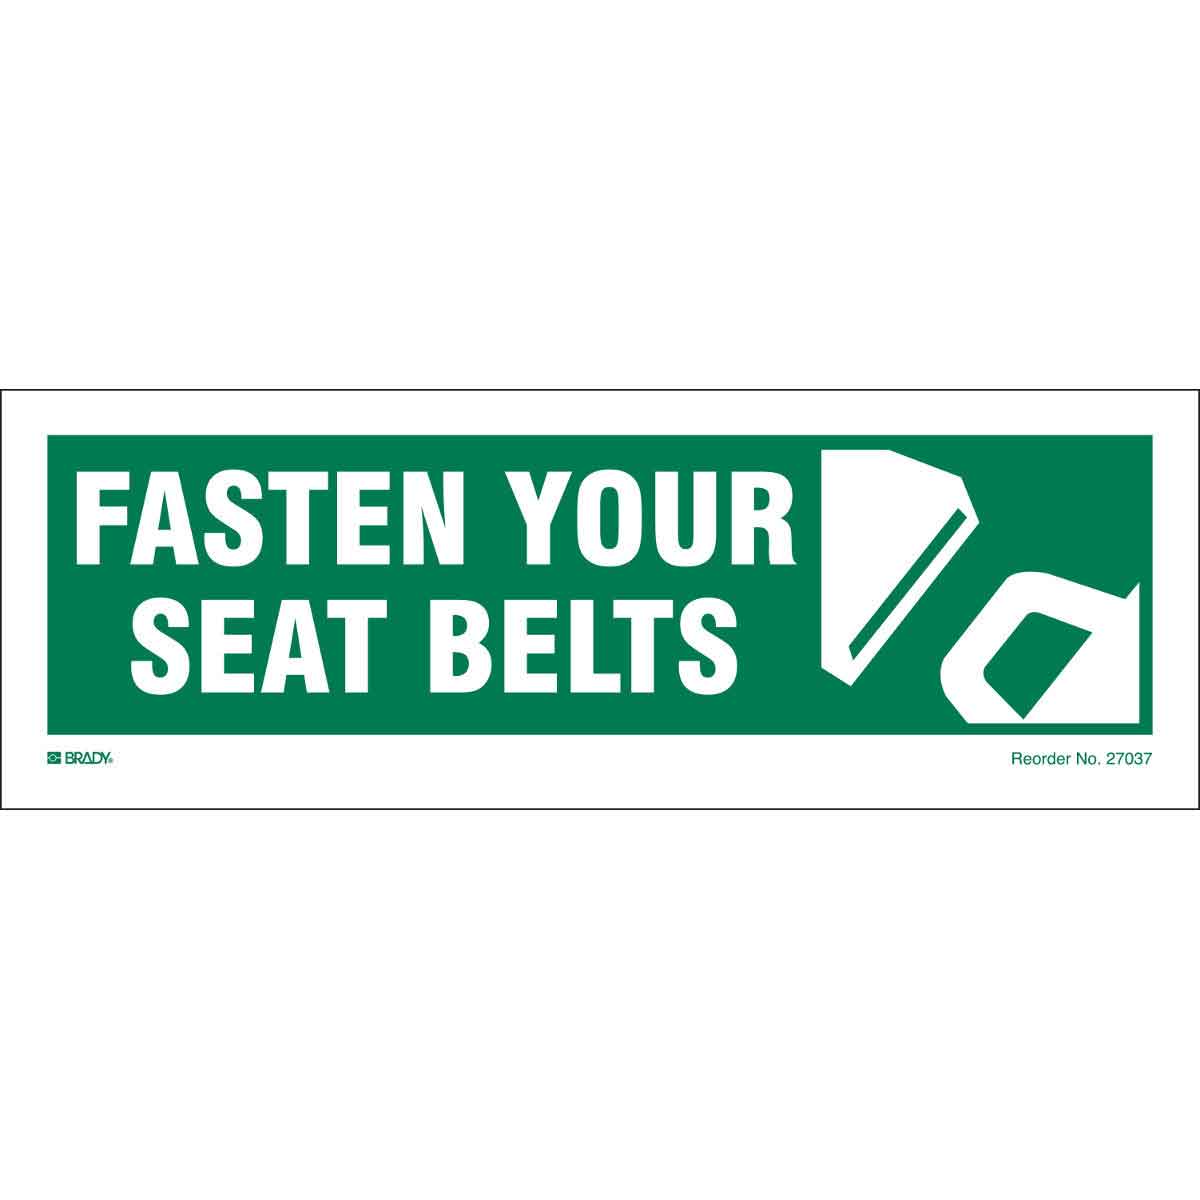 seat labels